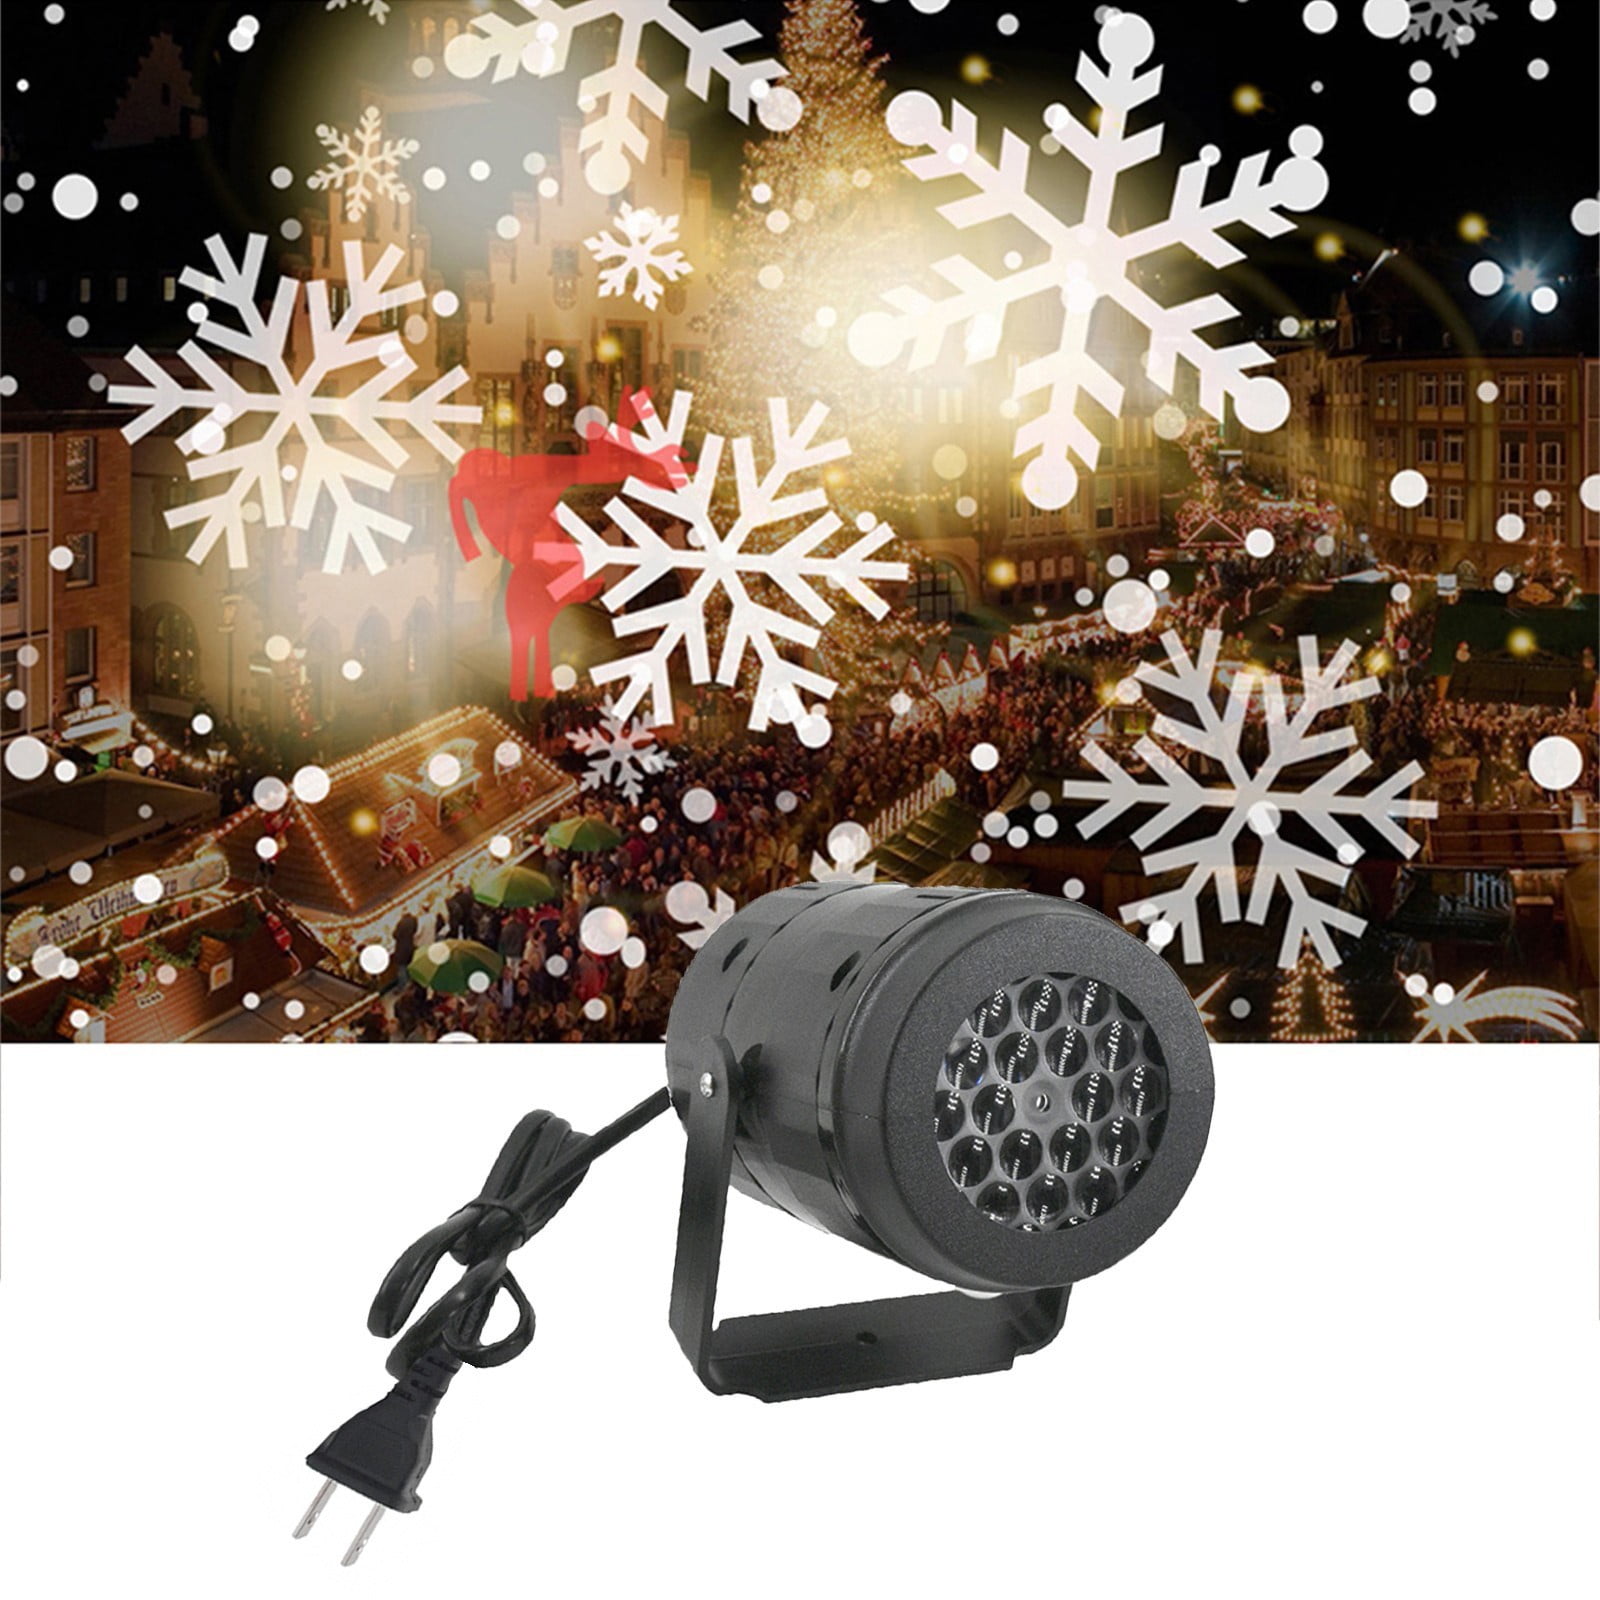 sikena New Wedding LED Decorative Lights Snowflakes Shape Christmas Xmas Tree Lights Outdoor String Lights